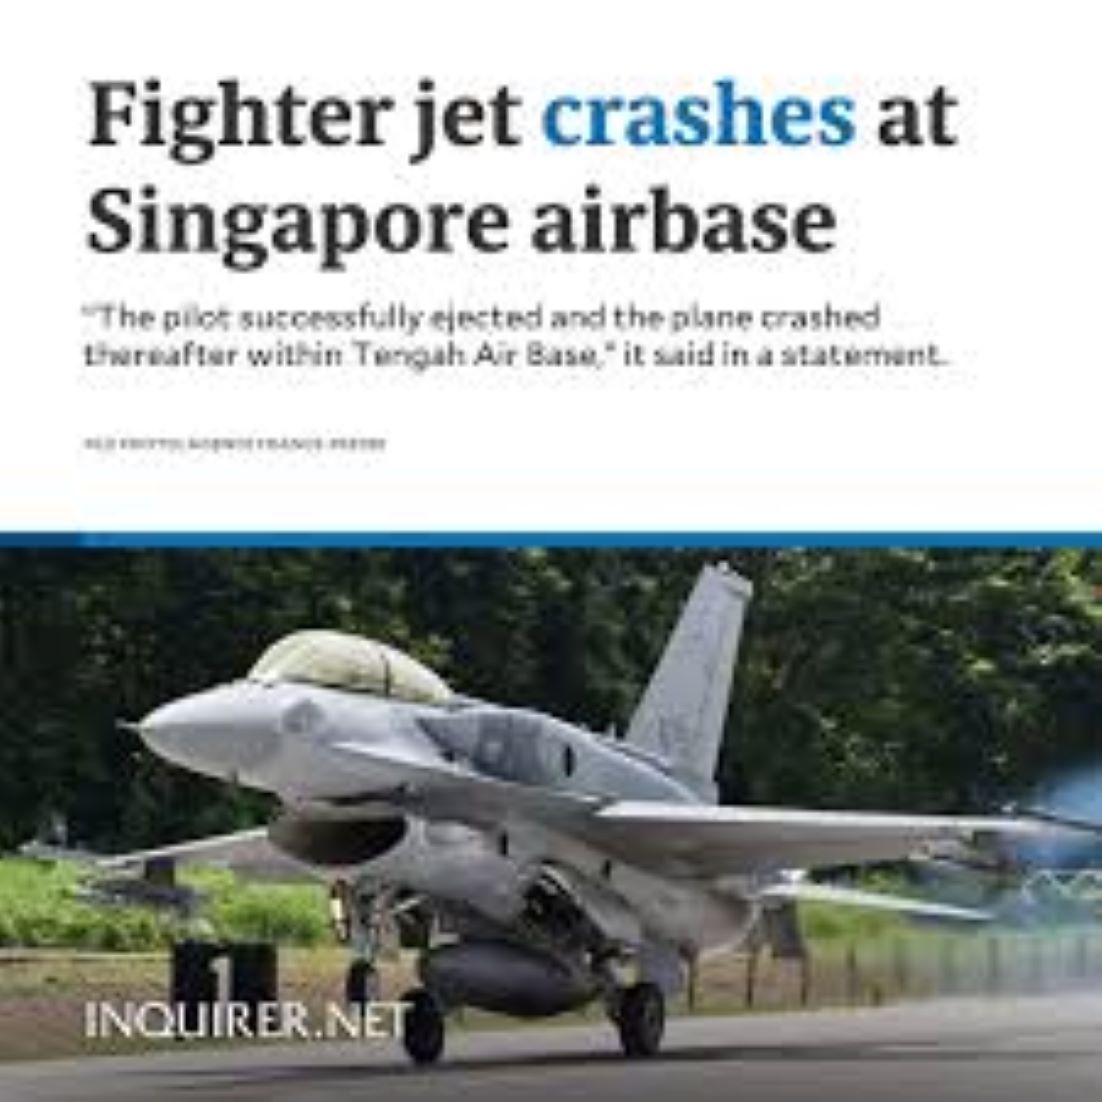 Singapore’s F-16 Jet Crashed At Air Base